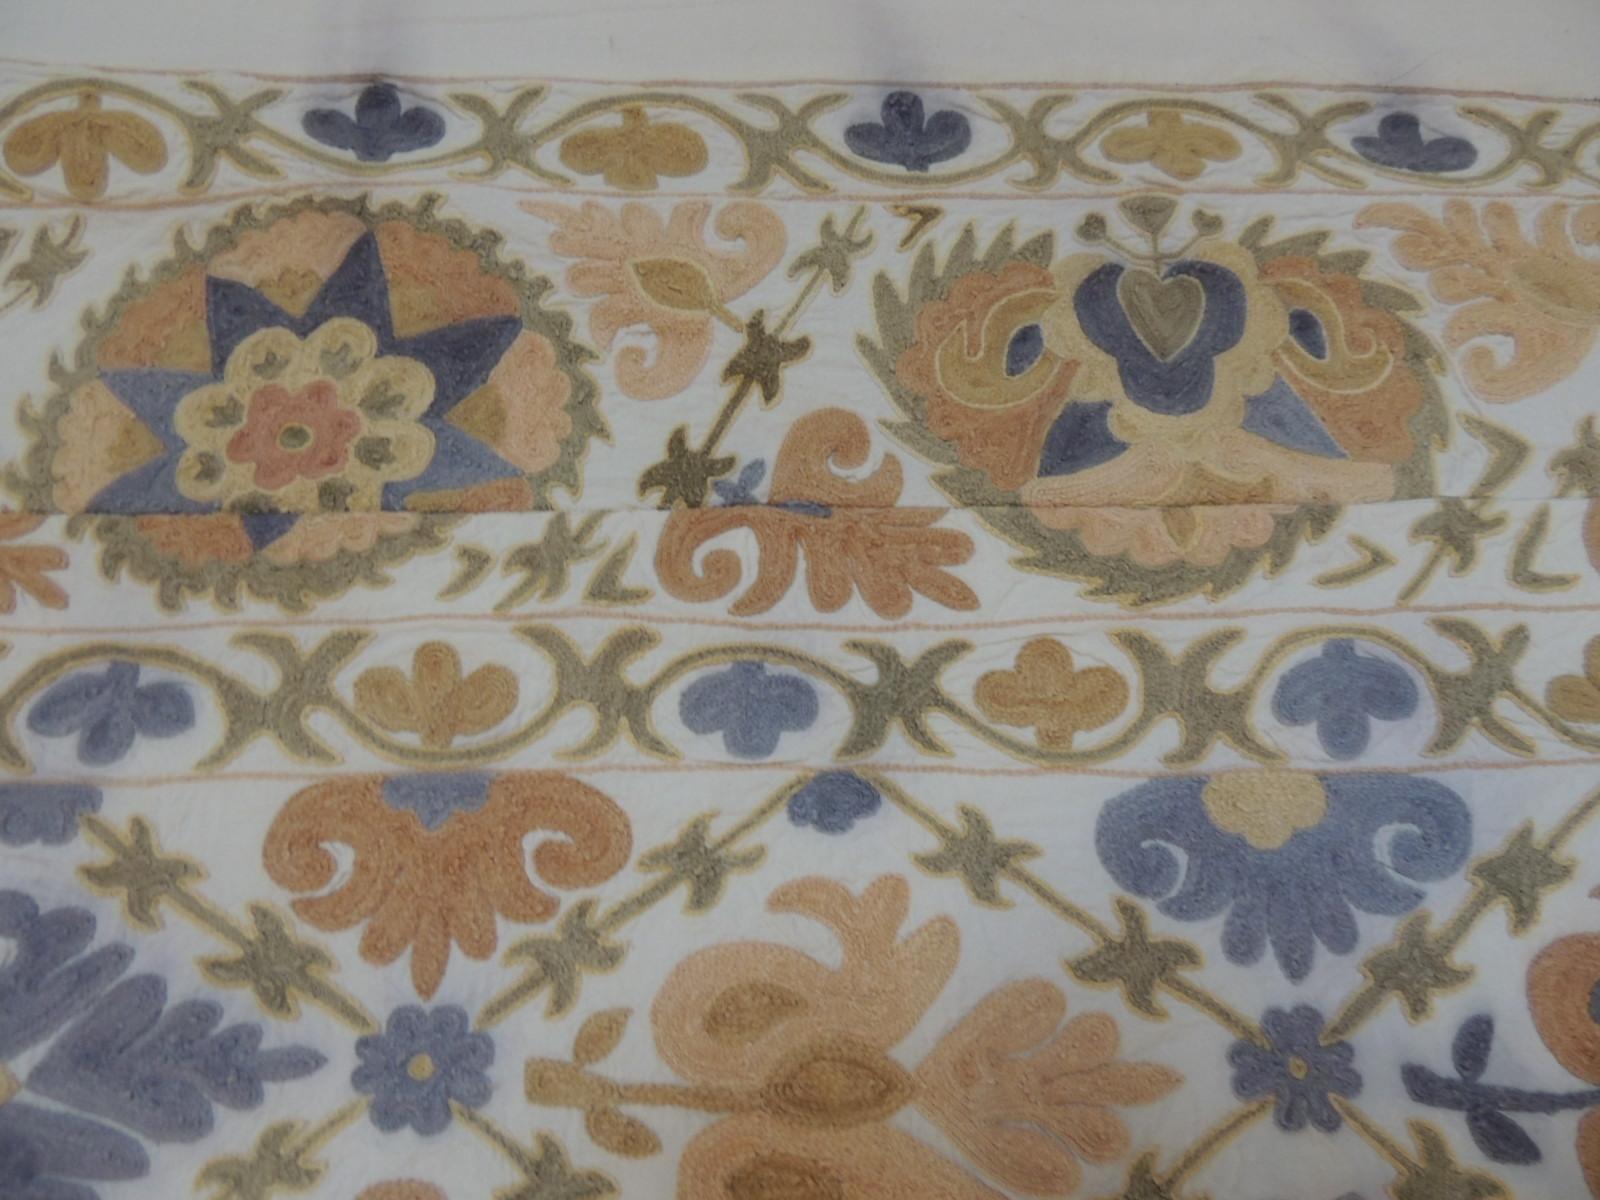 Late 20th Century Vintage Peach and Grey Uzbekistan Embroidery Suzani Textile Panel